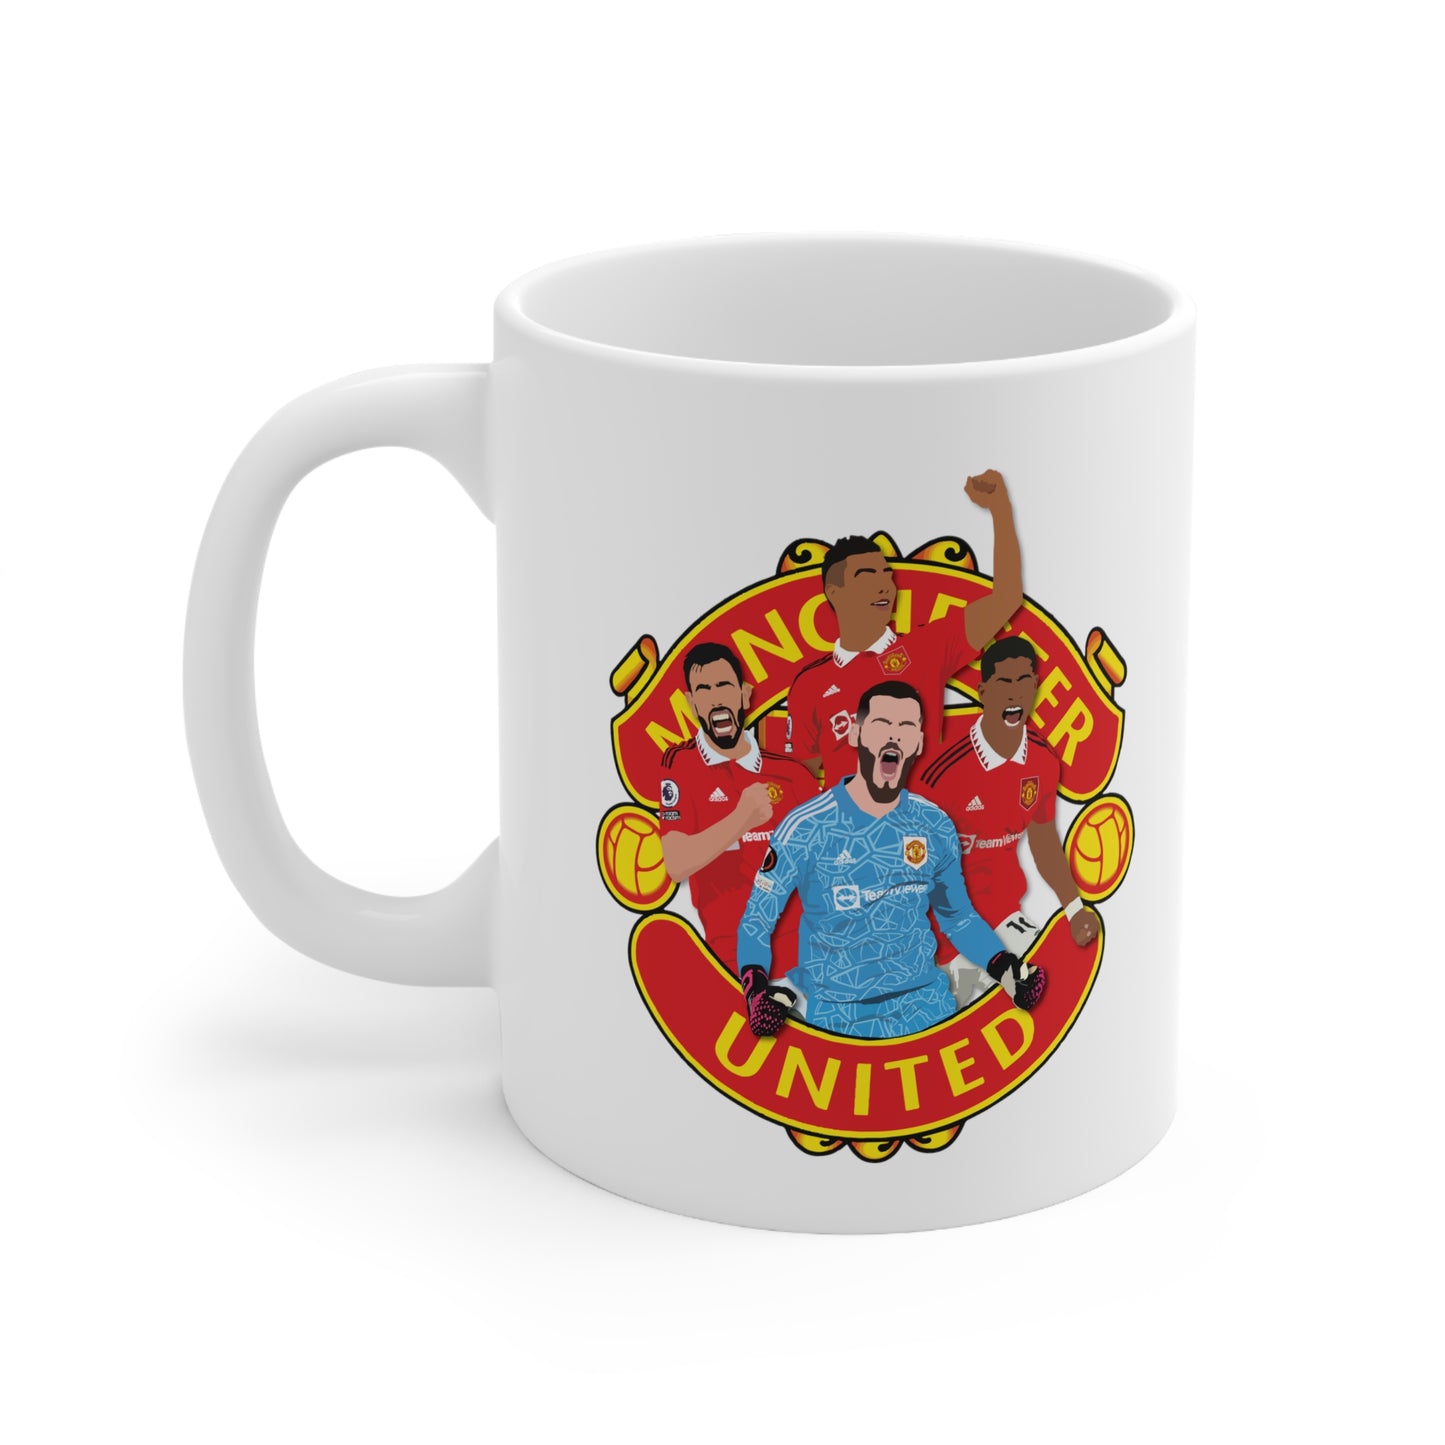 Manchester United koffiemok